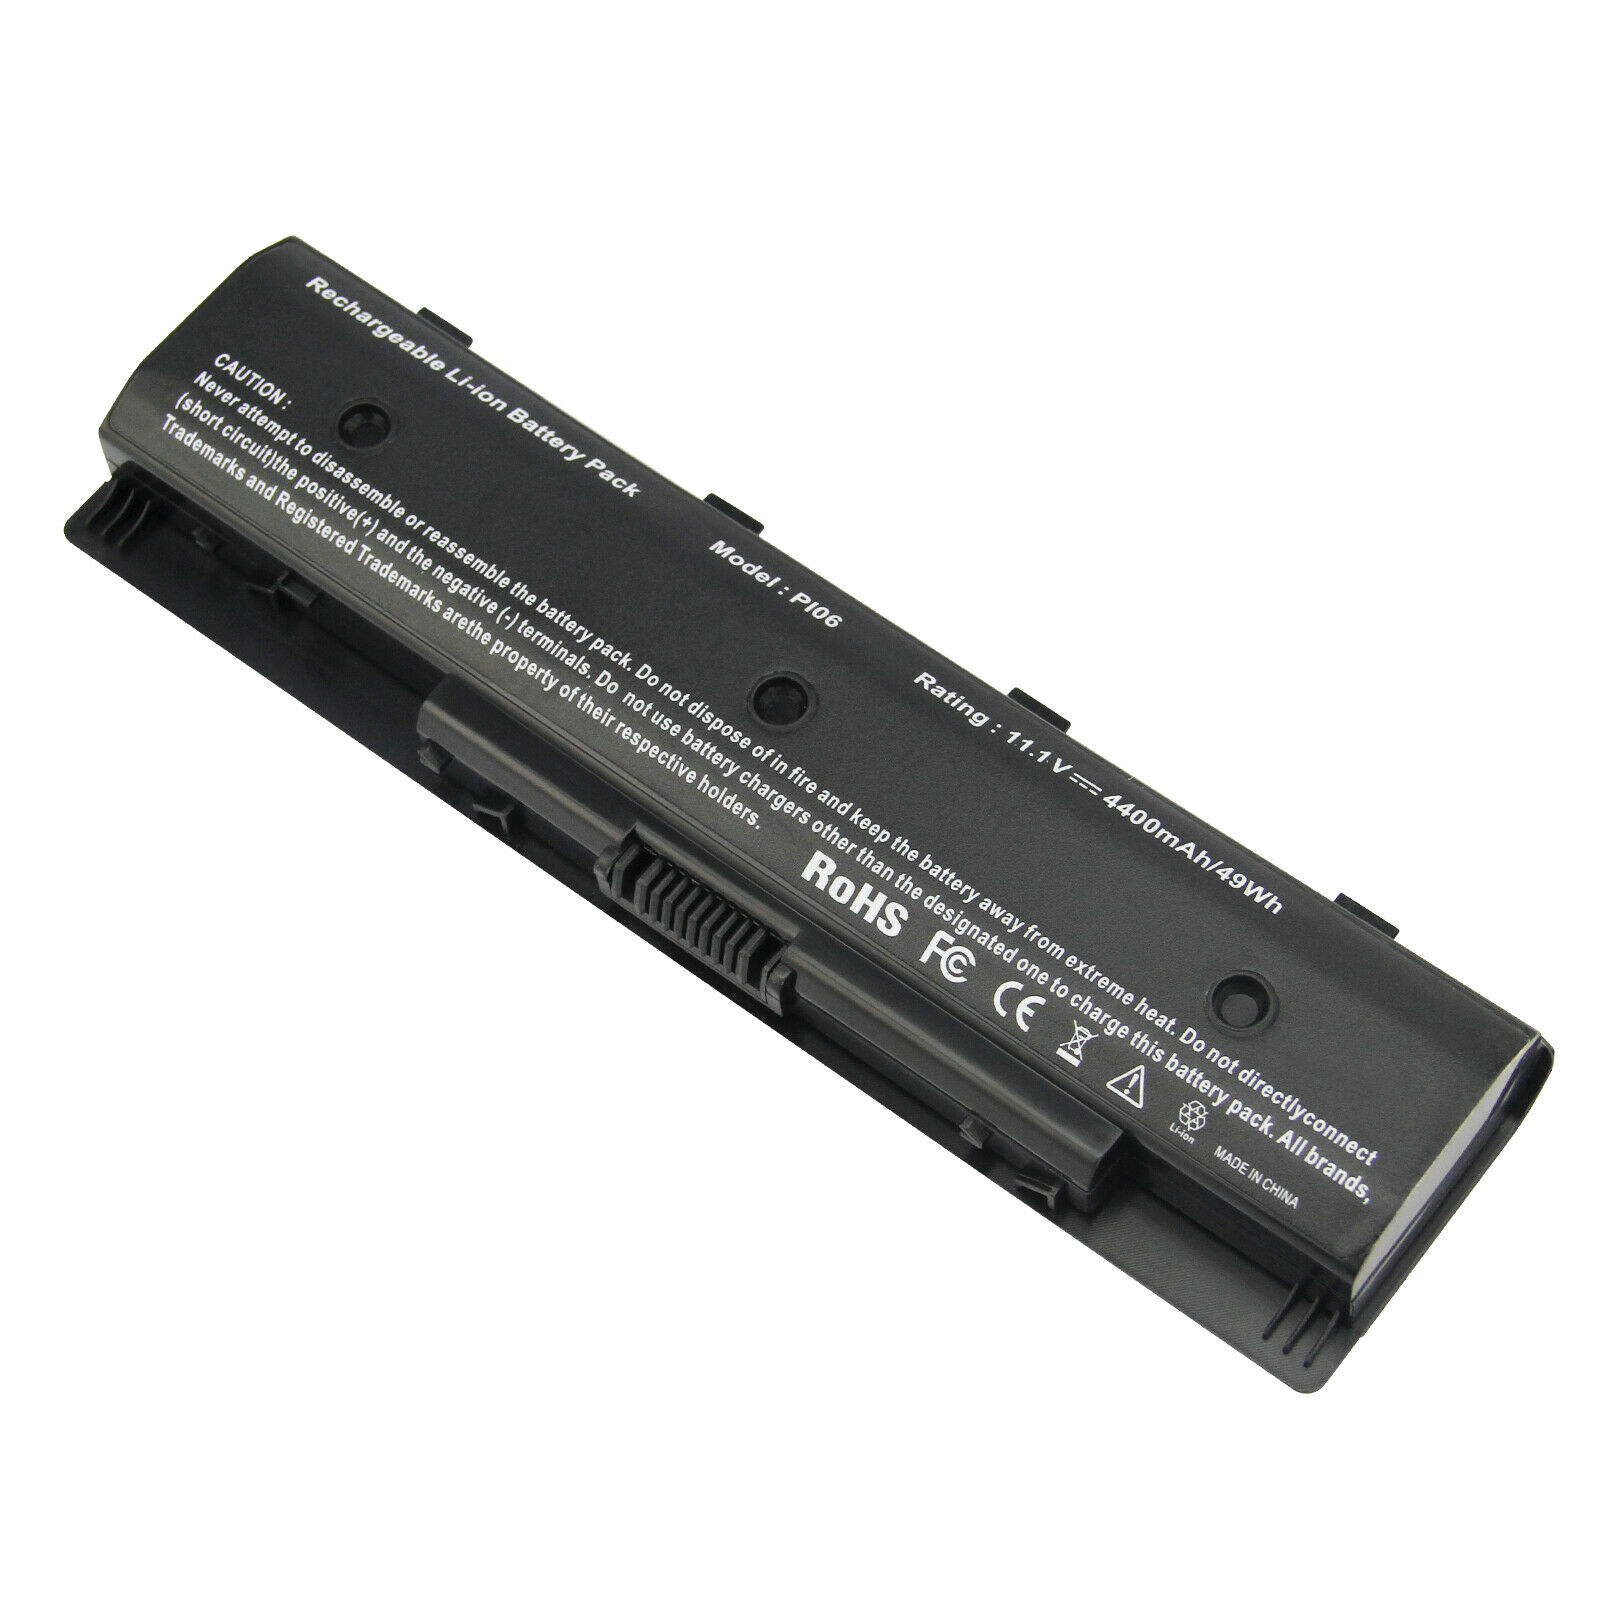 PI06 Battery for HP Envy 15 17 hstnn-yb40 710416-001 710417-001 P106 PC Notebook